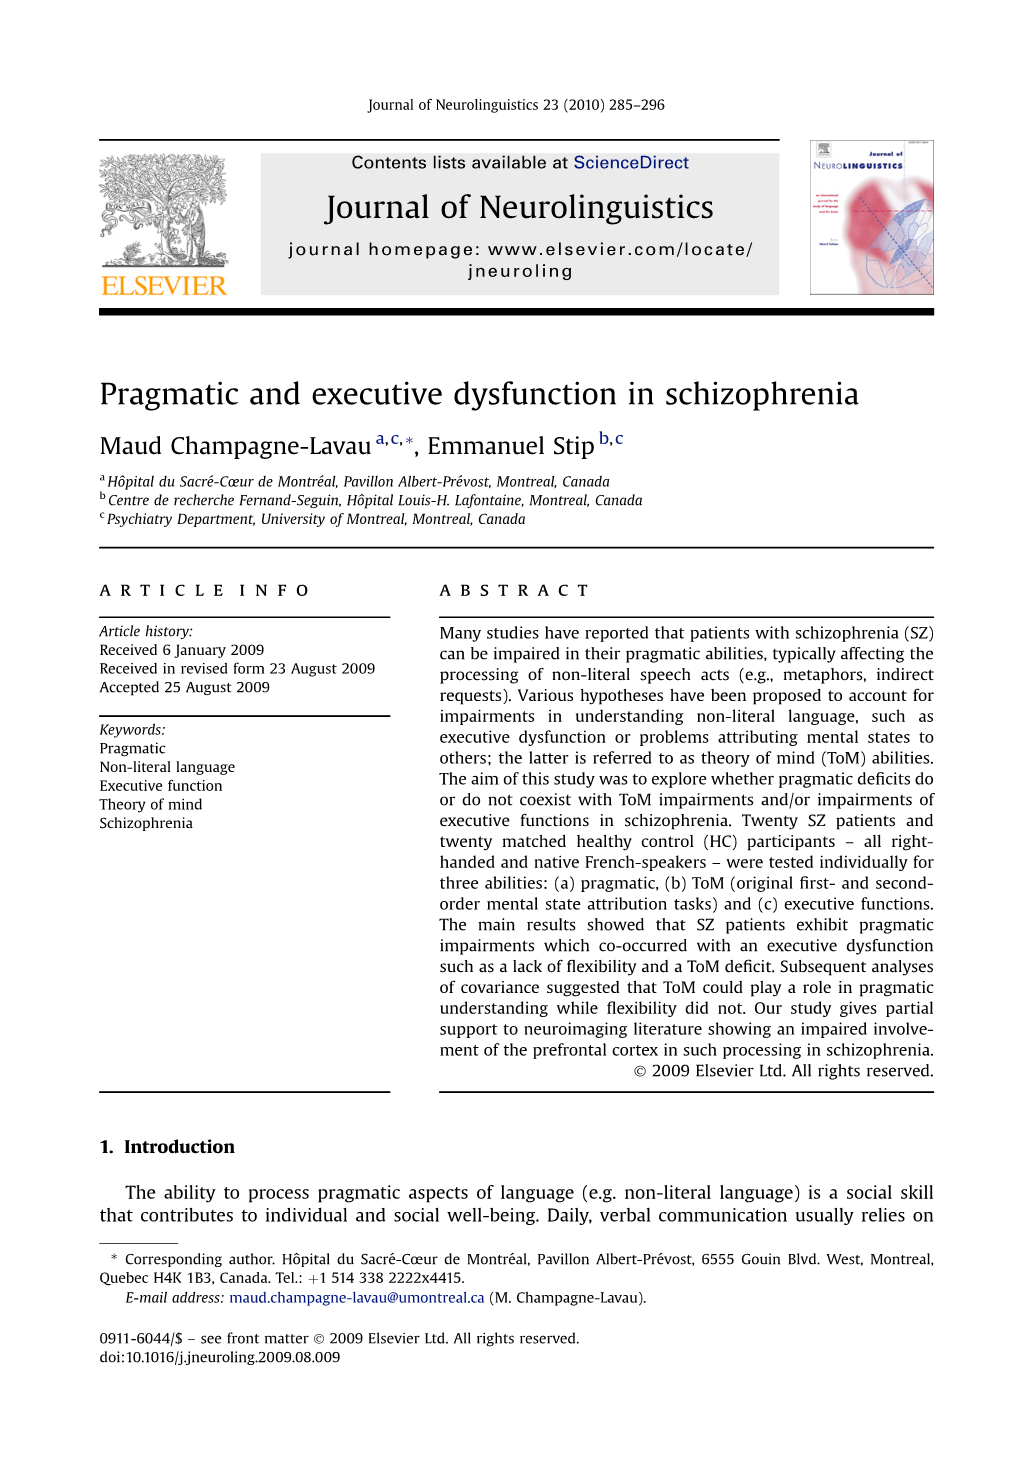 Pragmatic and Executive Dysfunction in Schizophrenia